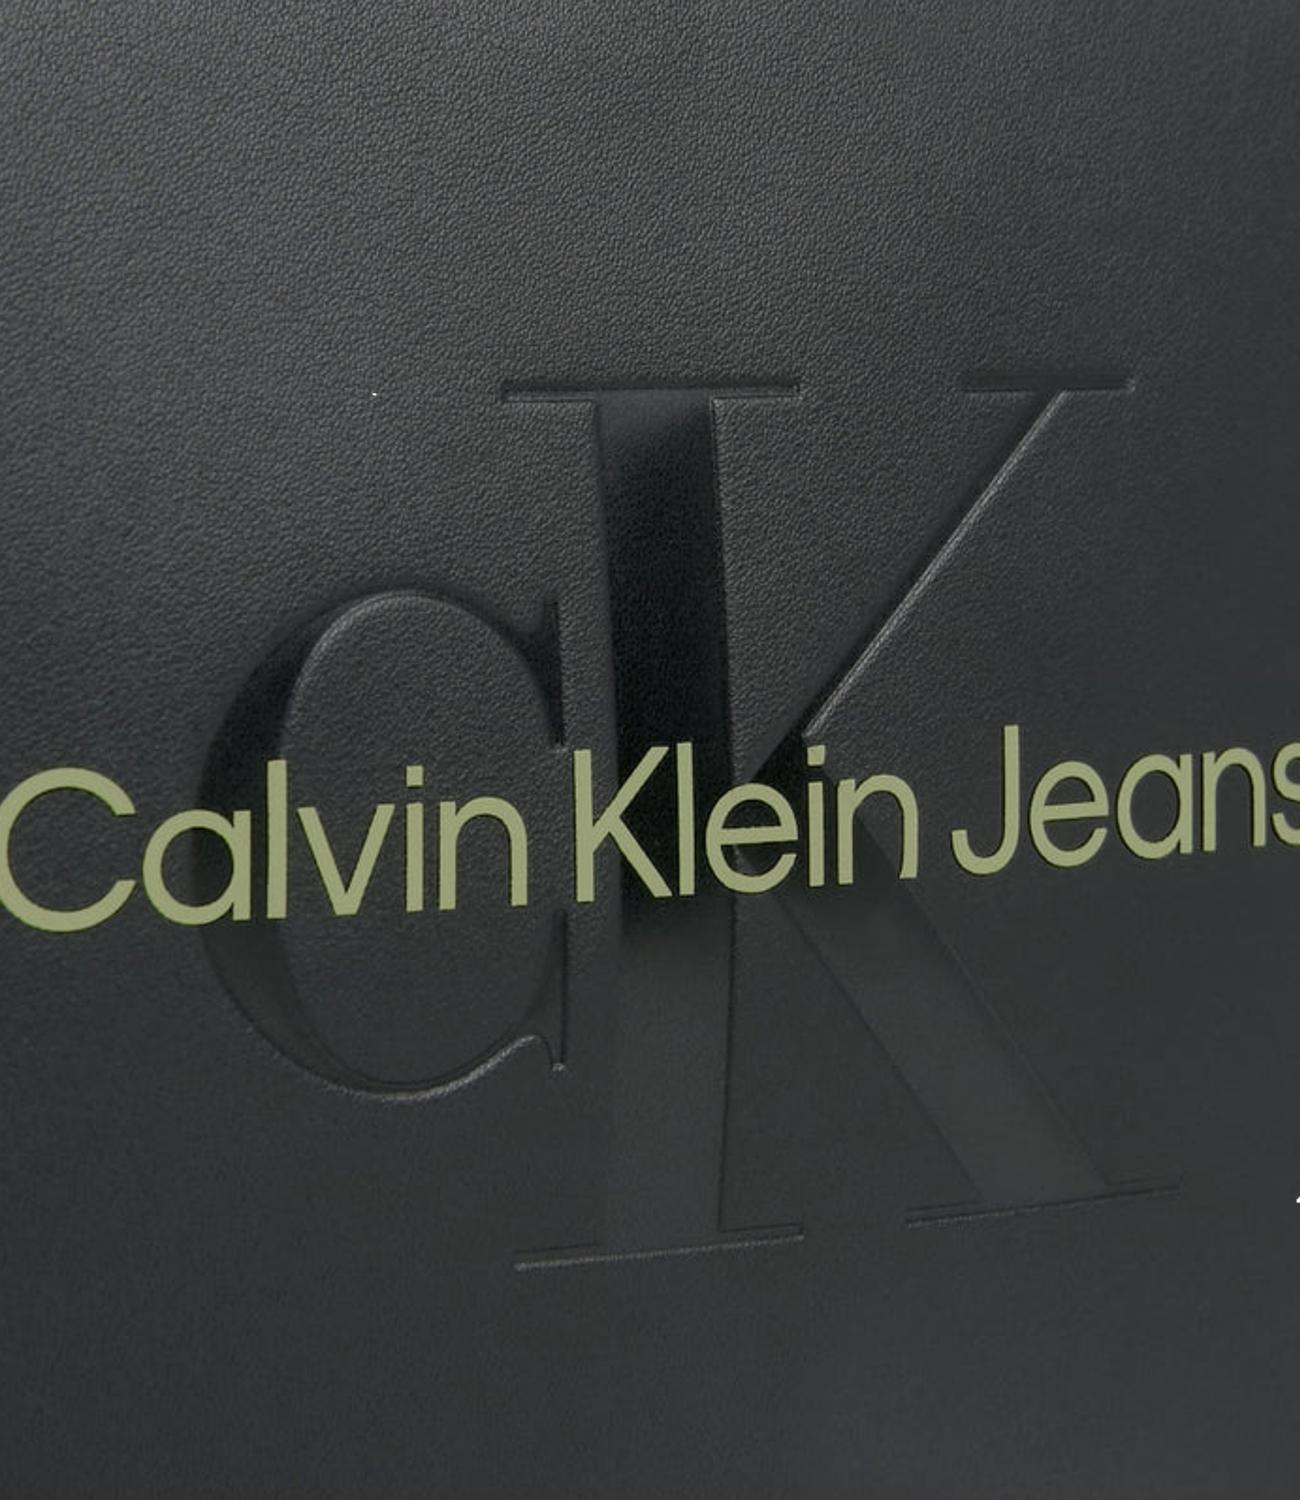 Borsa Calvin Klein tote bag nera